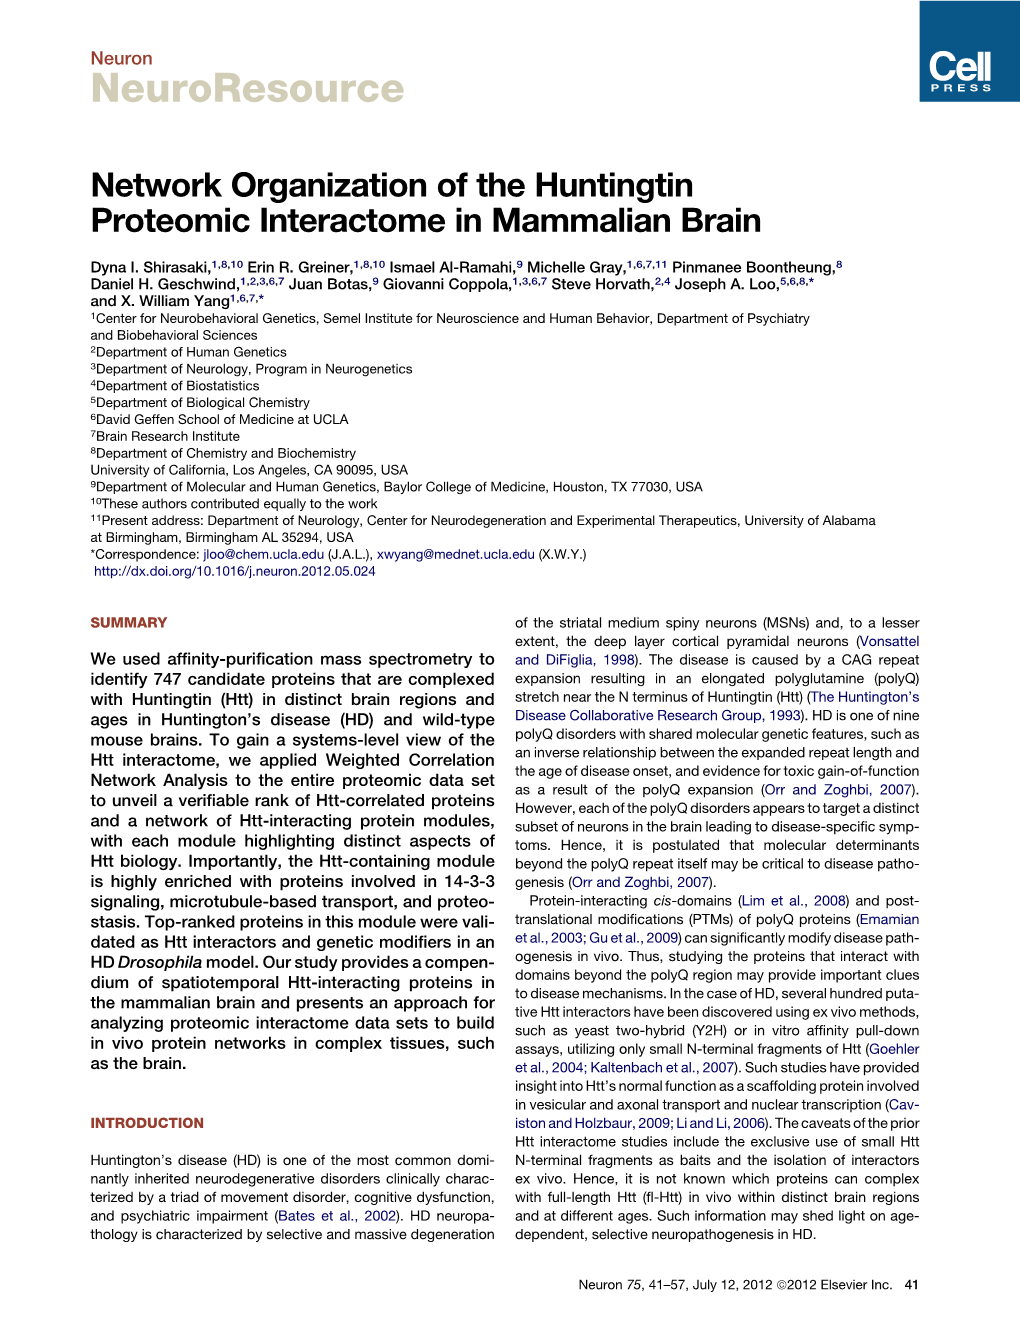 Network Organization of the Huntingtin Proteomic Interactome in Mammalian Brain